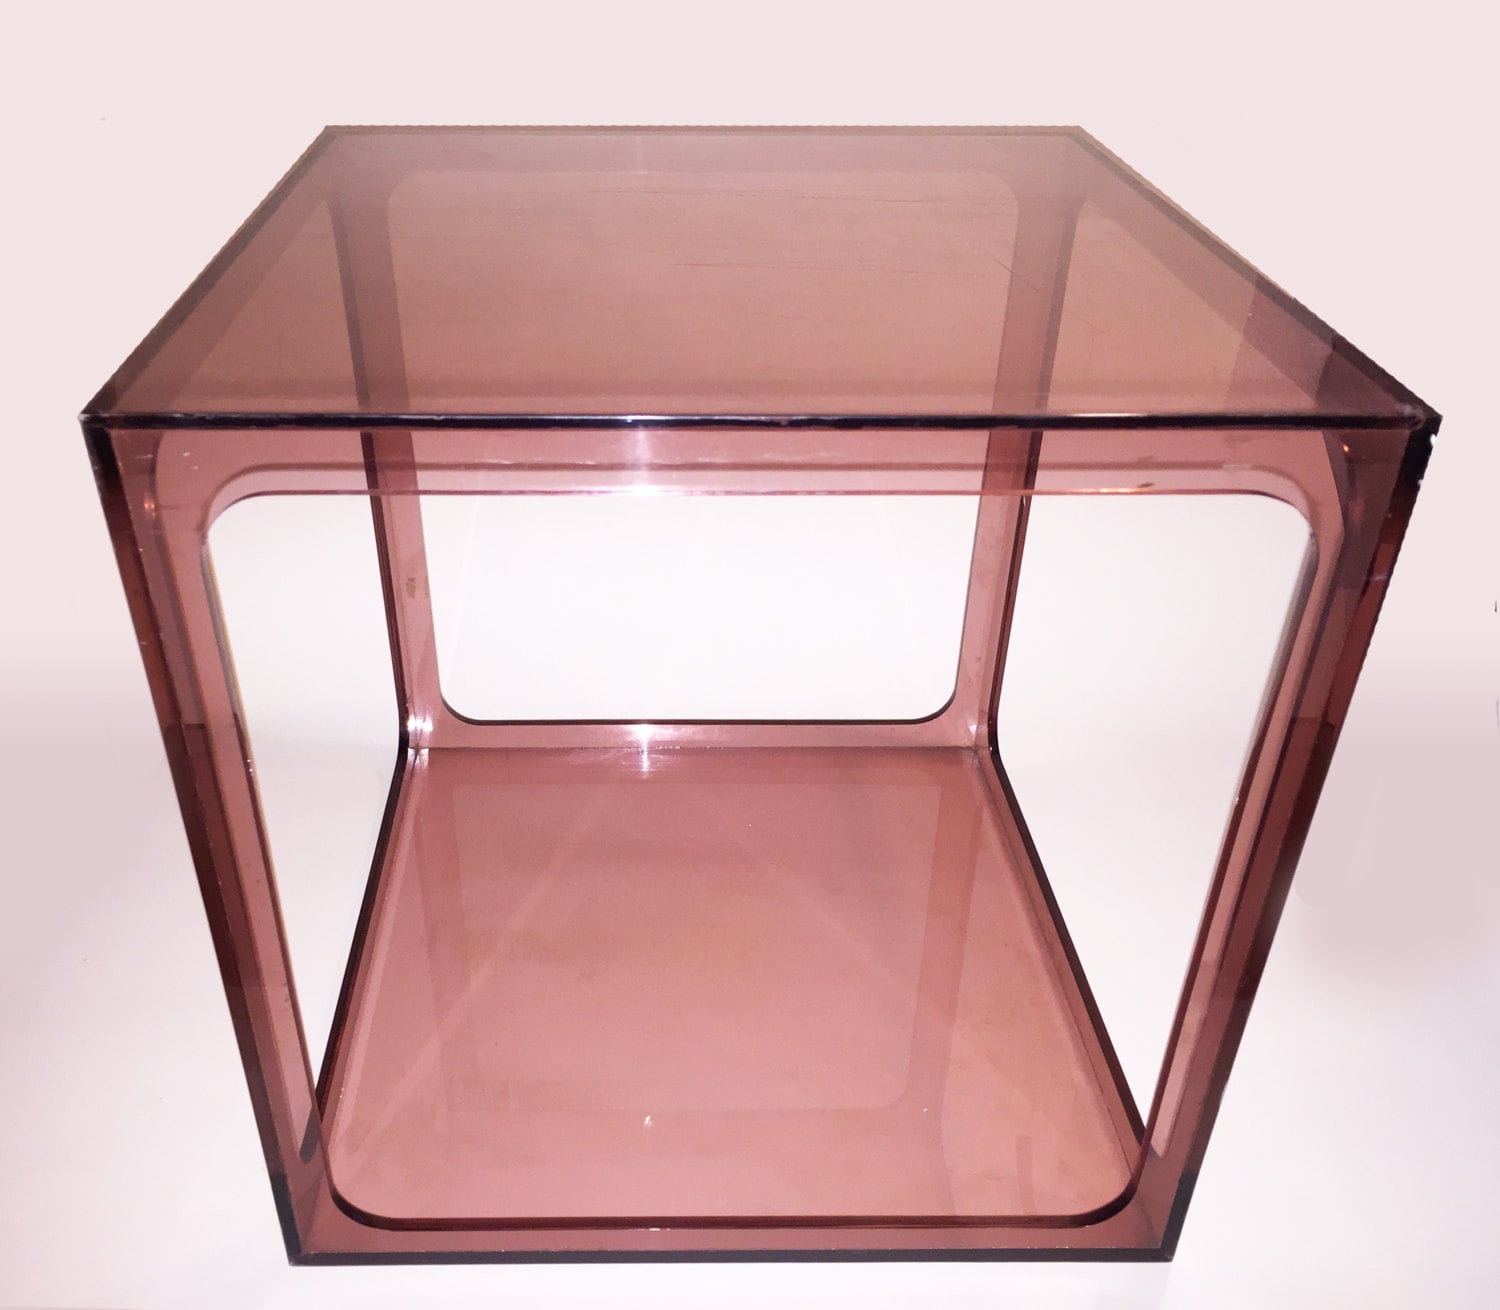 Acrylic Cube Side Tables by MaisonLorex on Etsy